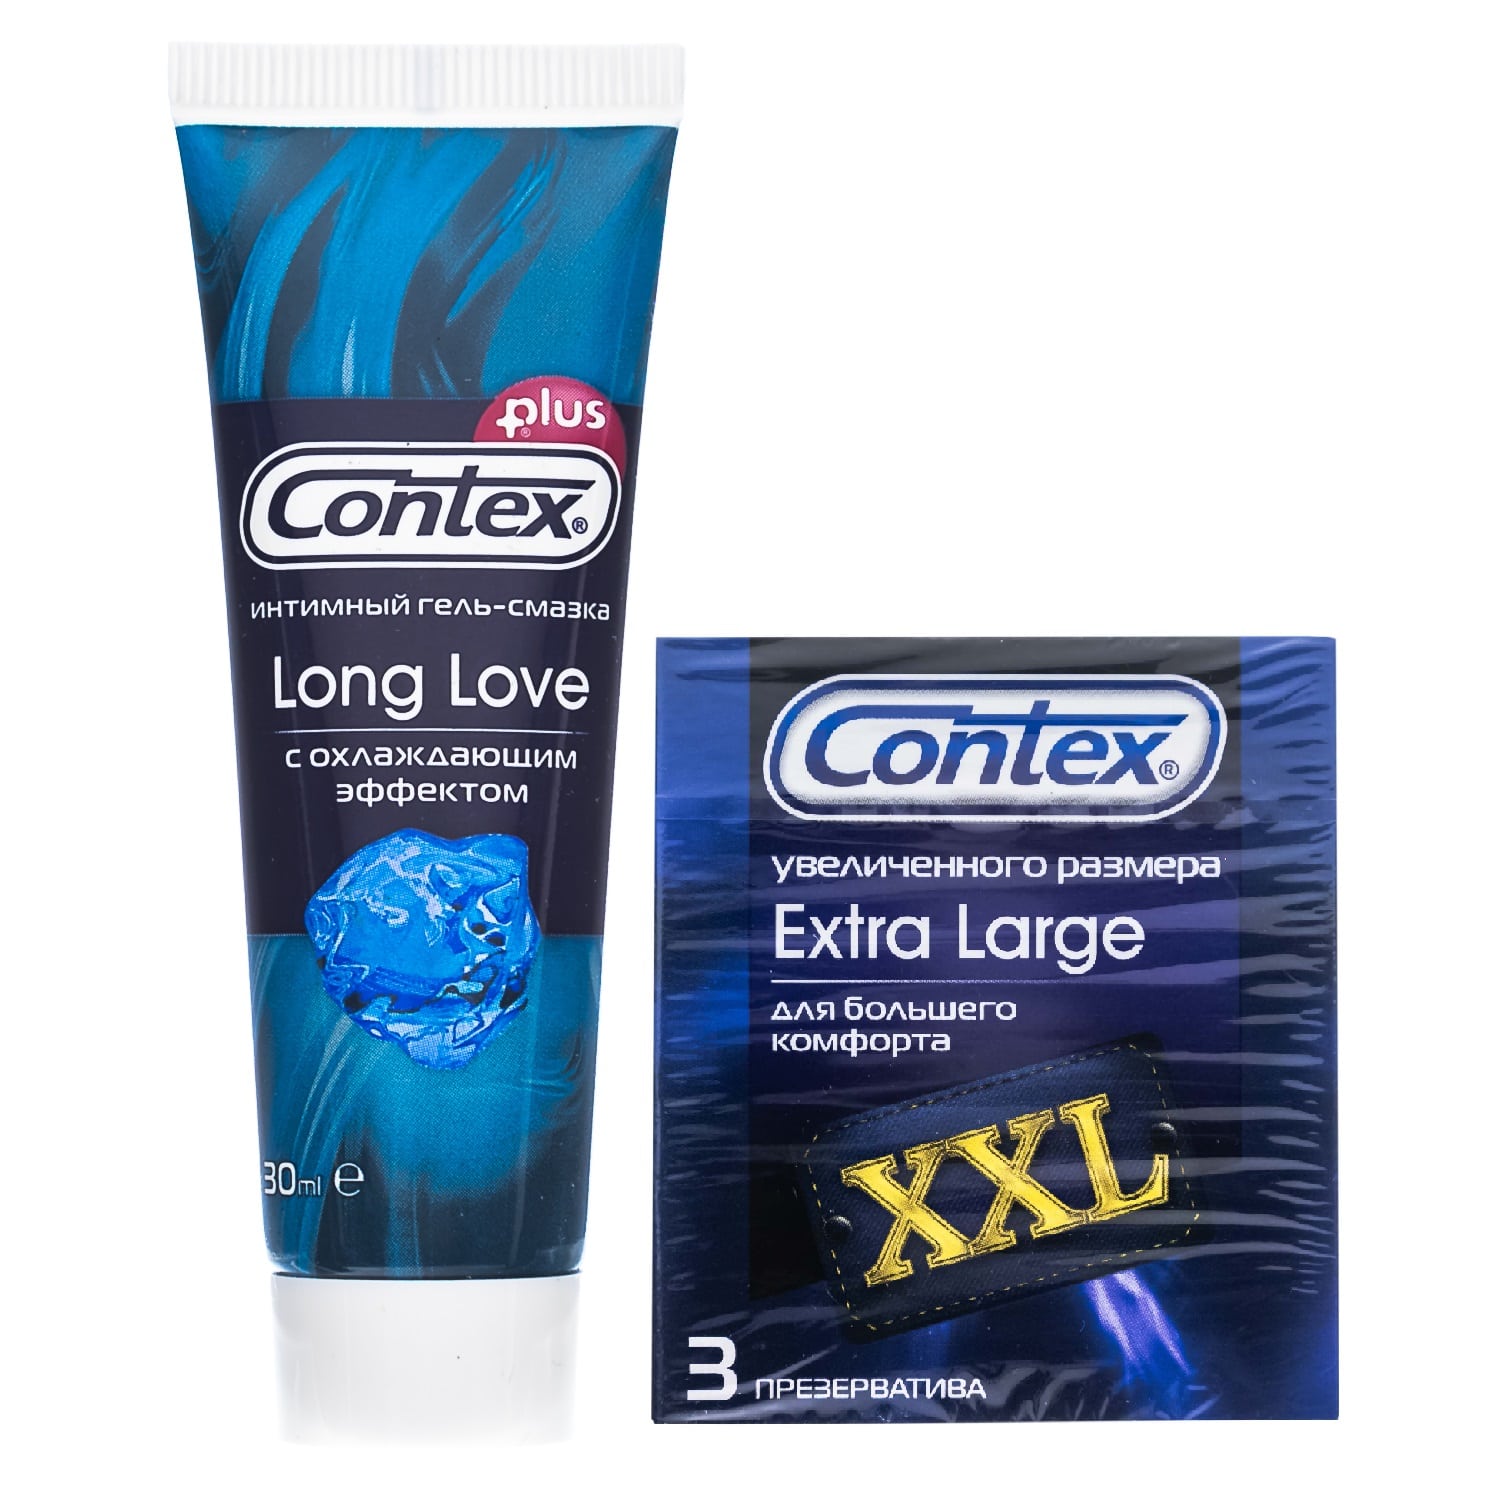 Contex Набор: презервативы Extra Large XXL №3 + гель-смазка продлевающий акт 30 мл (Contex, Презервативы) цена и фото